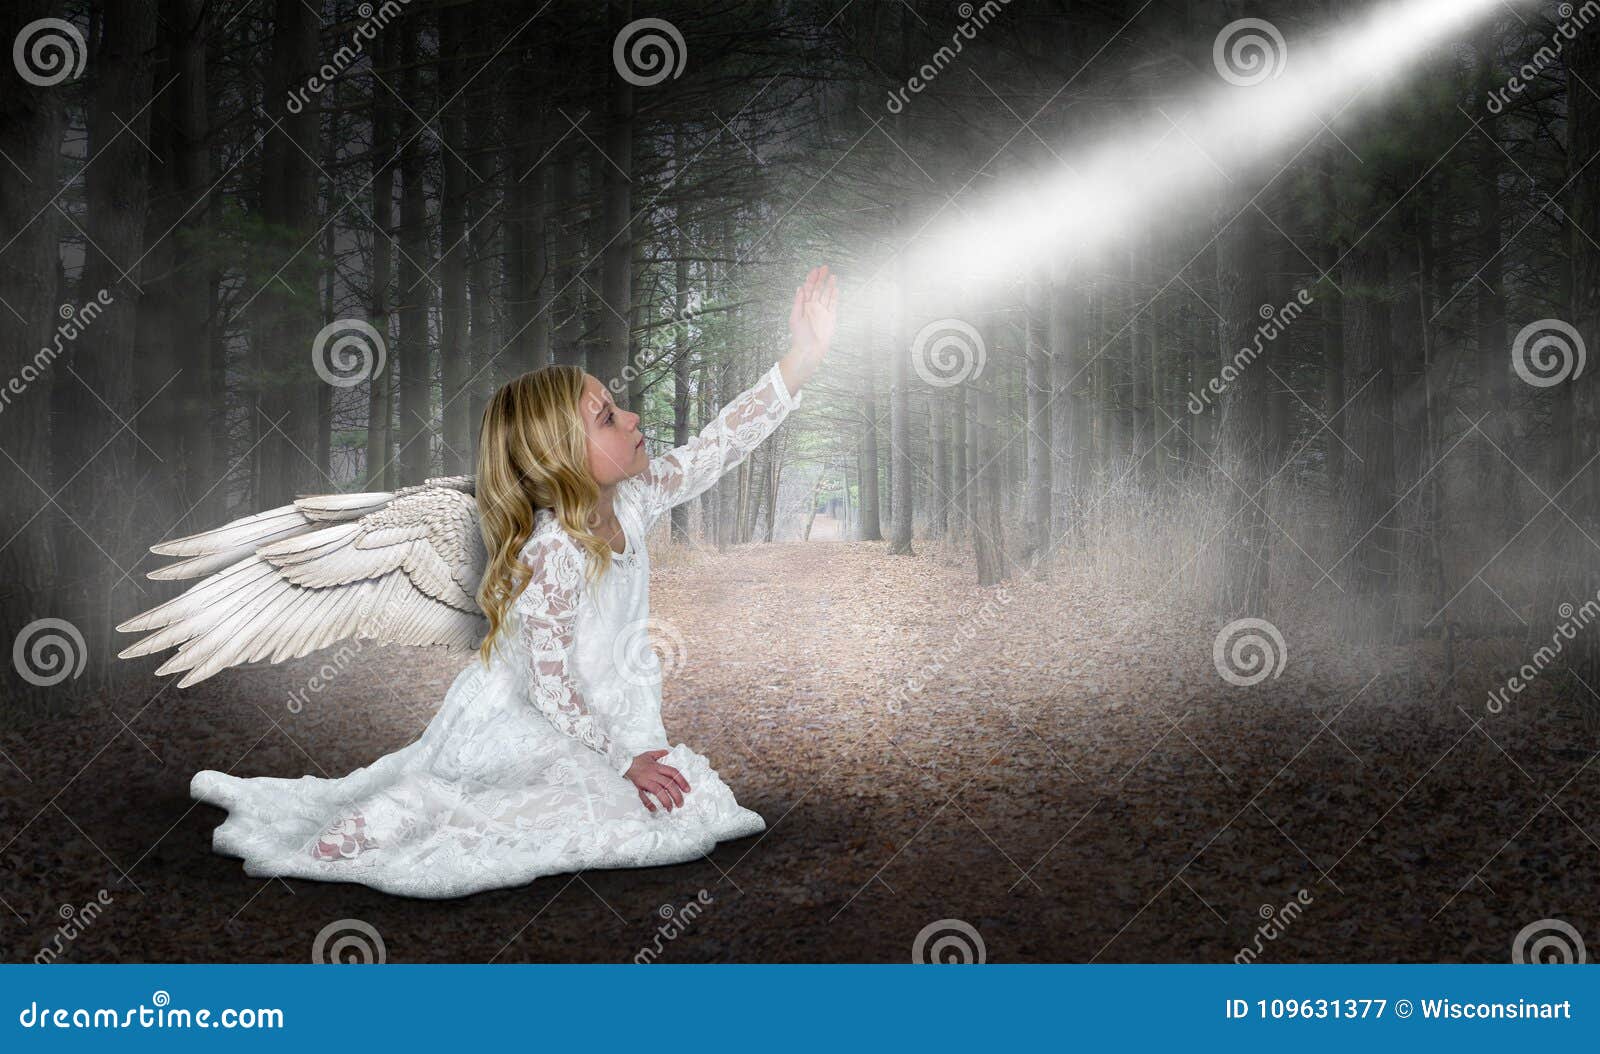 Angel, God, Love, Hope, Peace, Nature Stock Image - Image of background ...